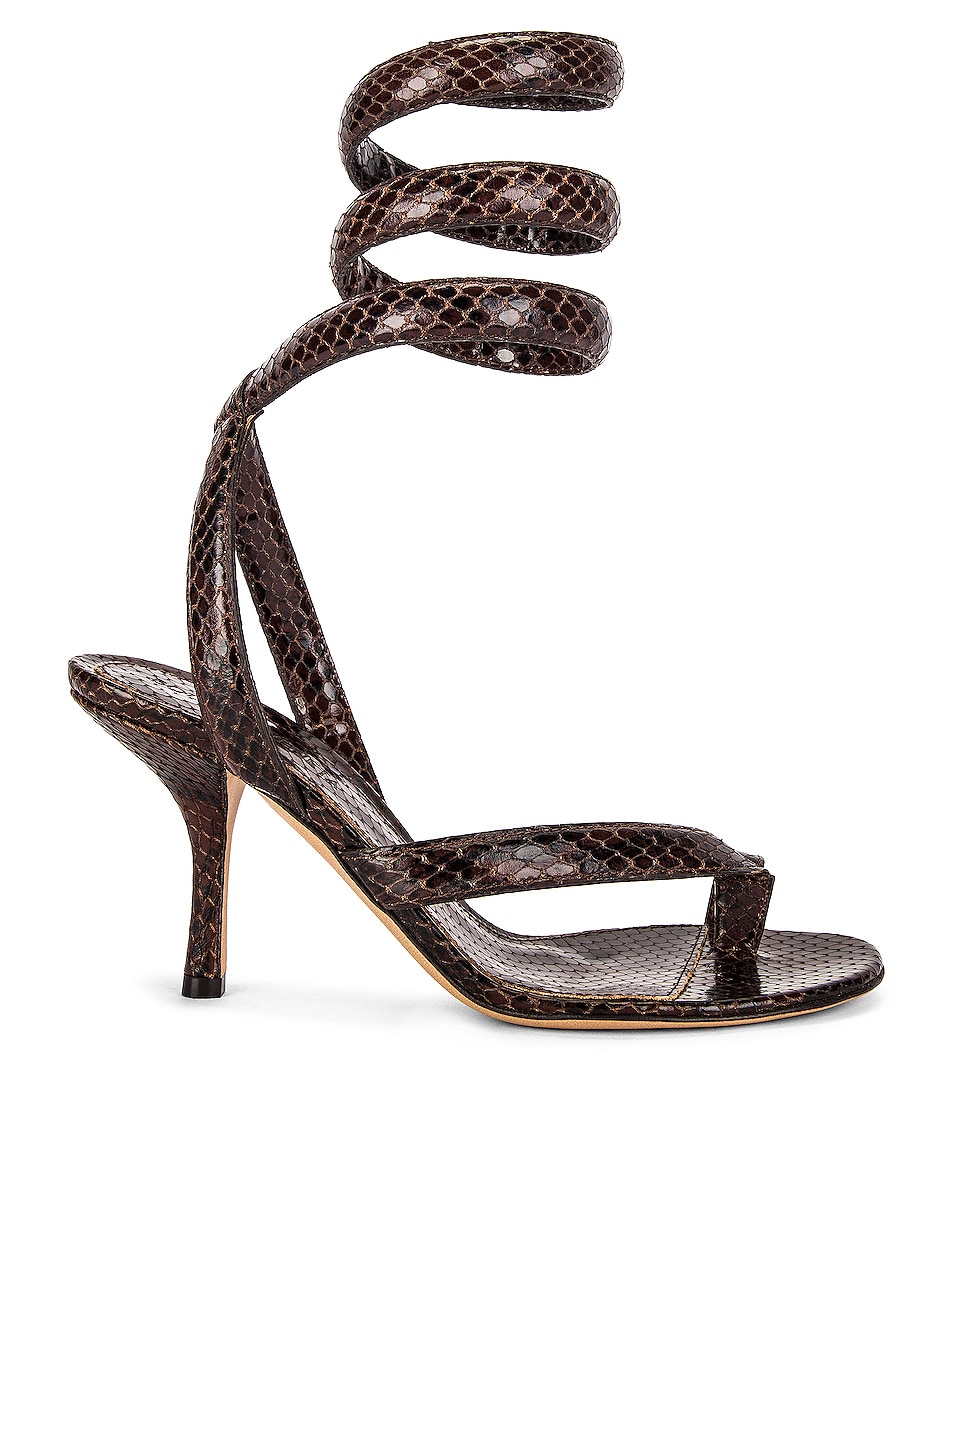 Bottega Veneta Printed Python Ankle Twist Heels in Chocolate | FWRD